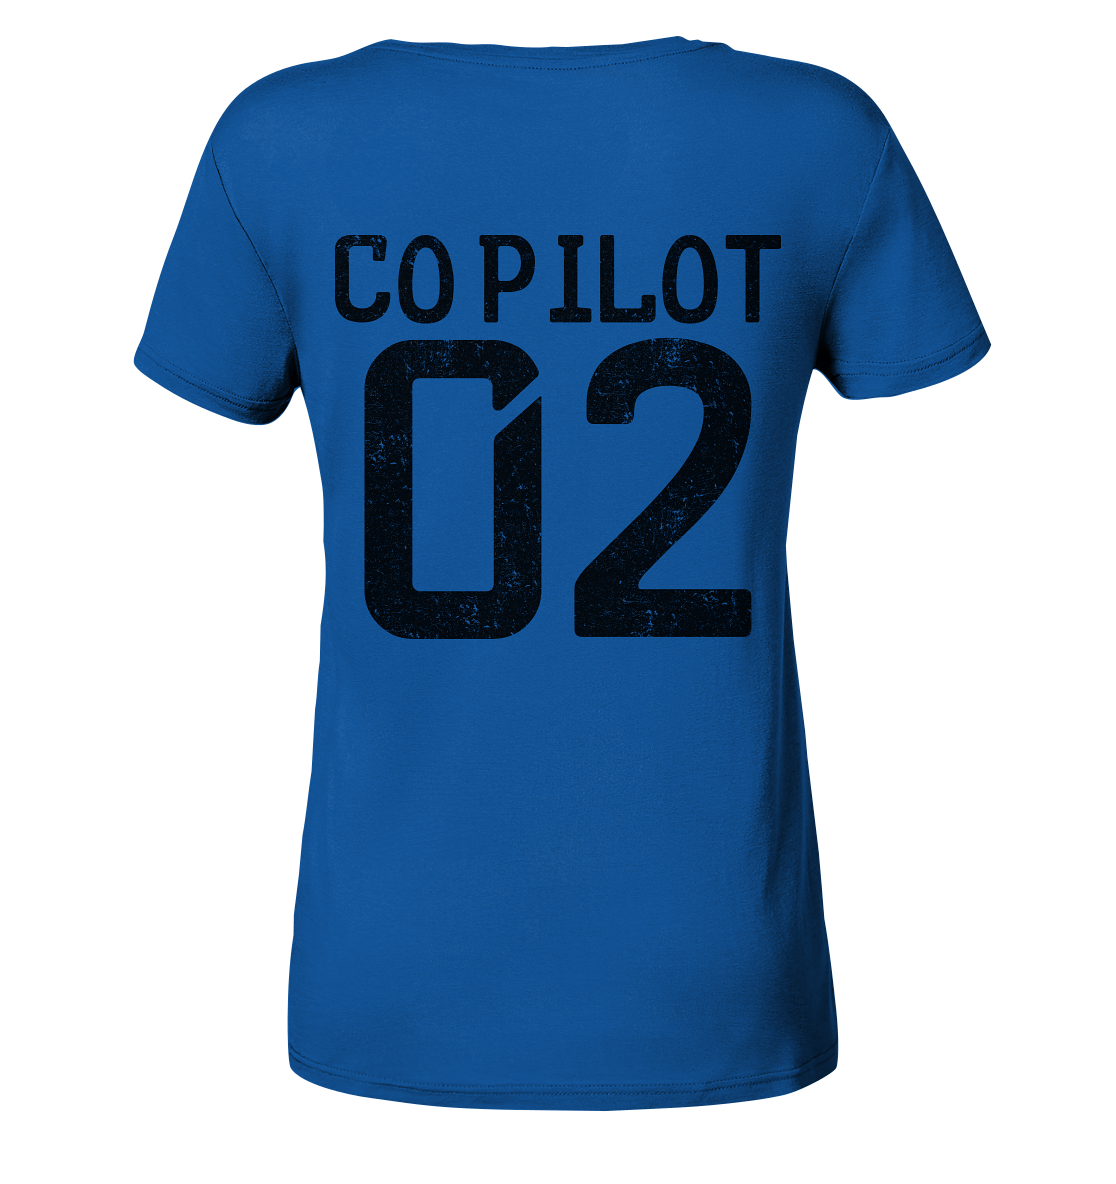 Codallg_Copilot02 - Ladies Organic Shirt